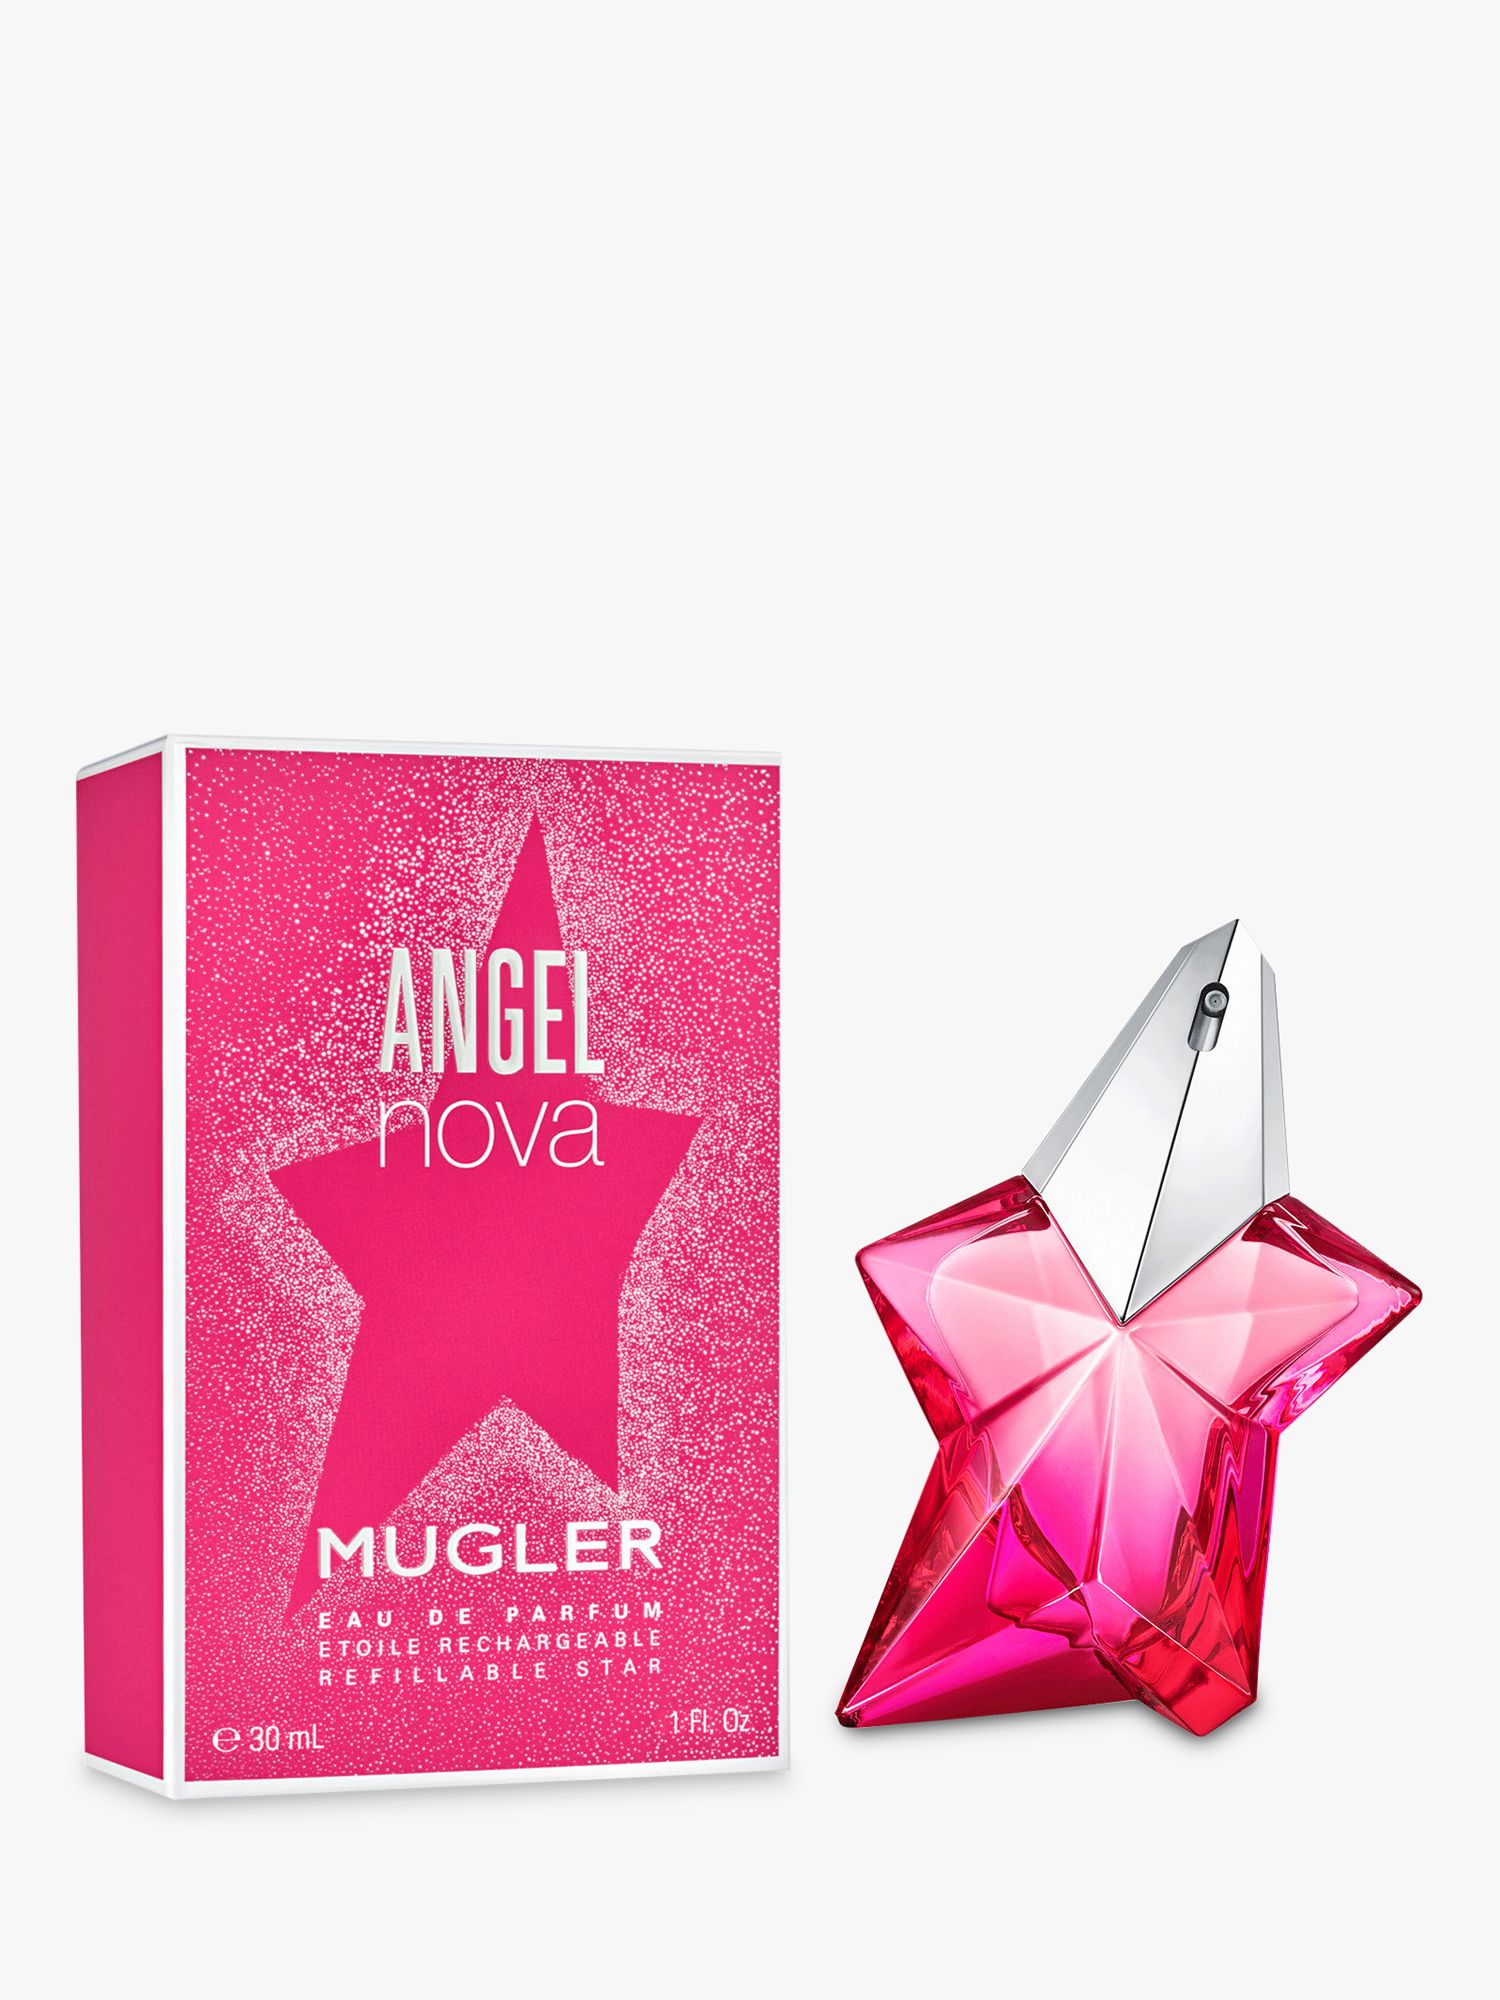 Mugler Angel Nova Eau de Parfum Refillable, 30ml 2